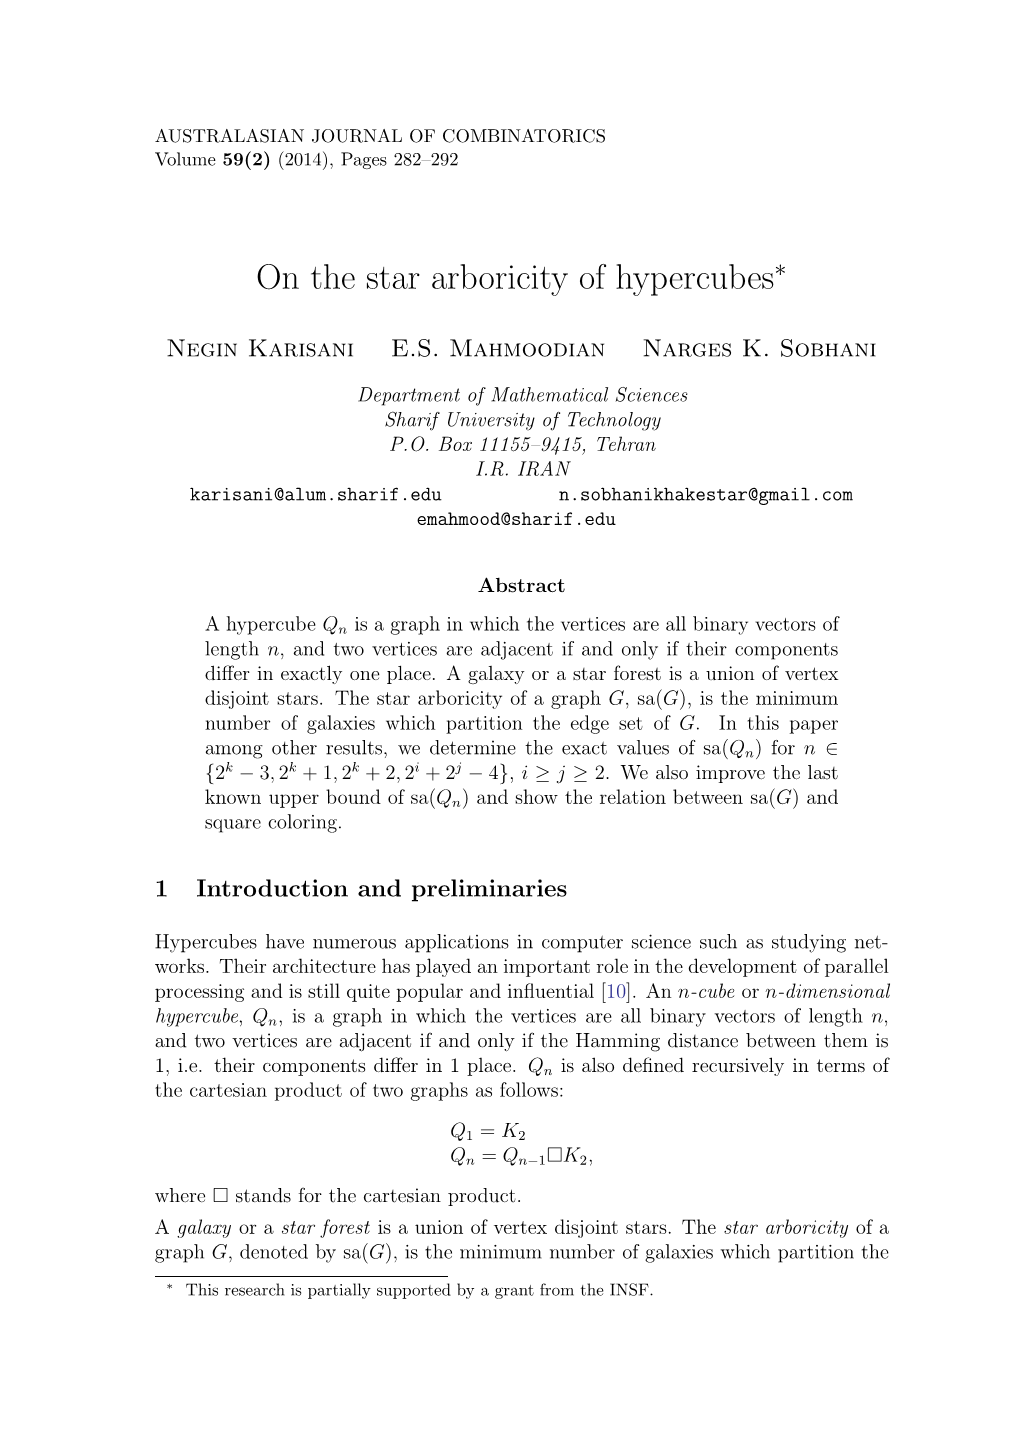 On the Star Arboricity of Hypercubes∗